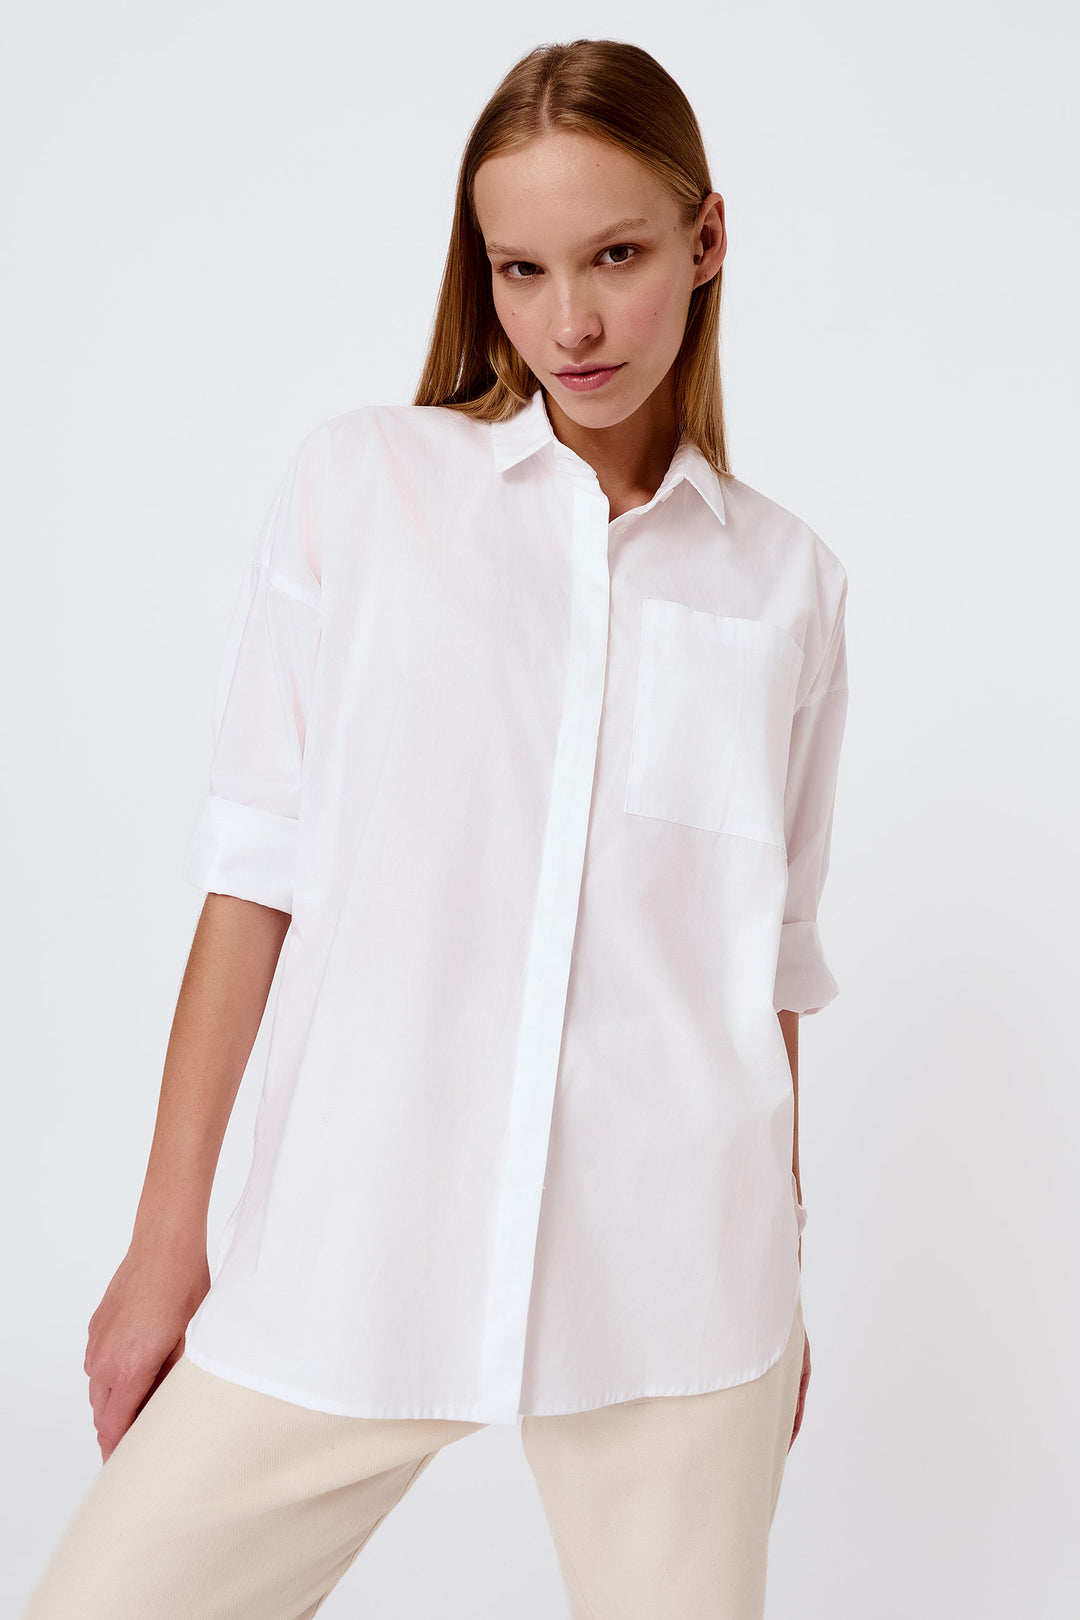 Übergroßes weißes Hemd